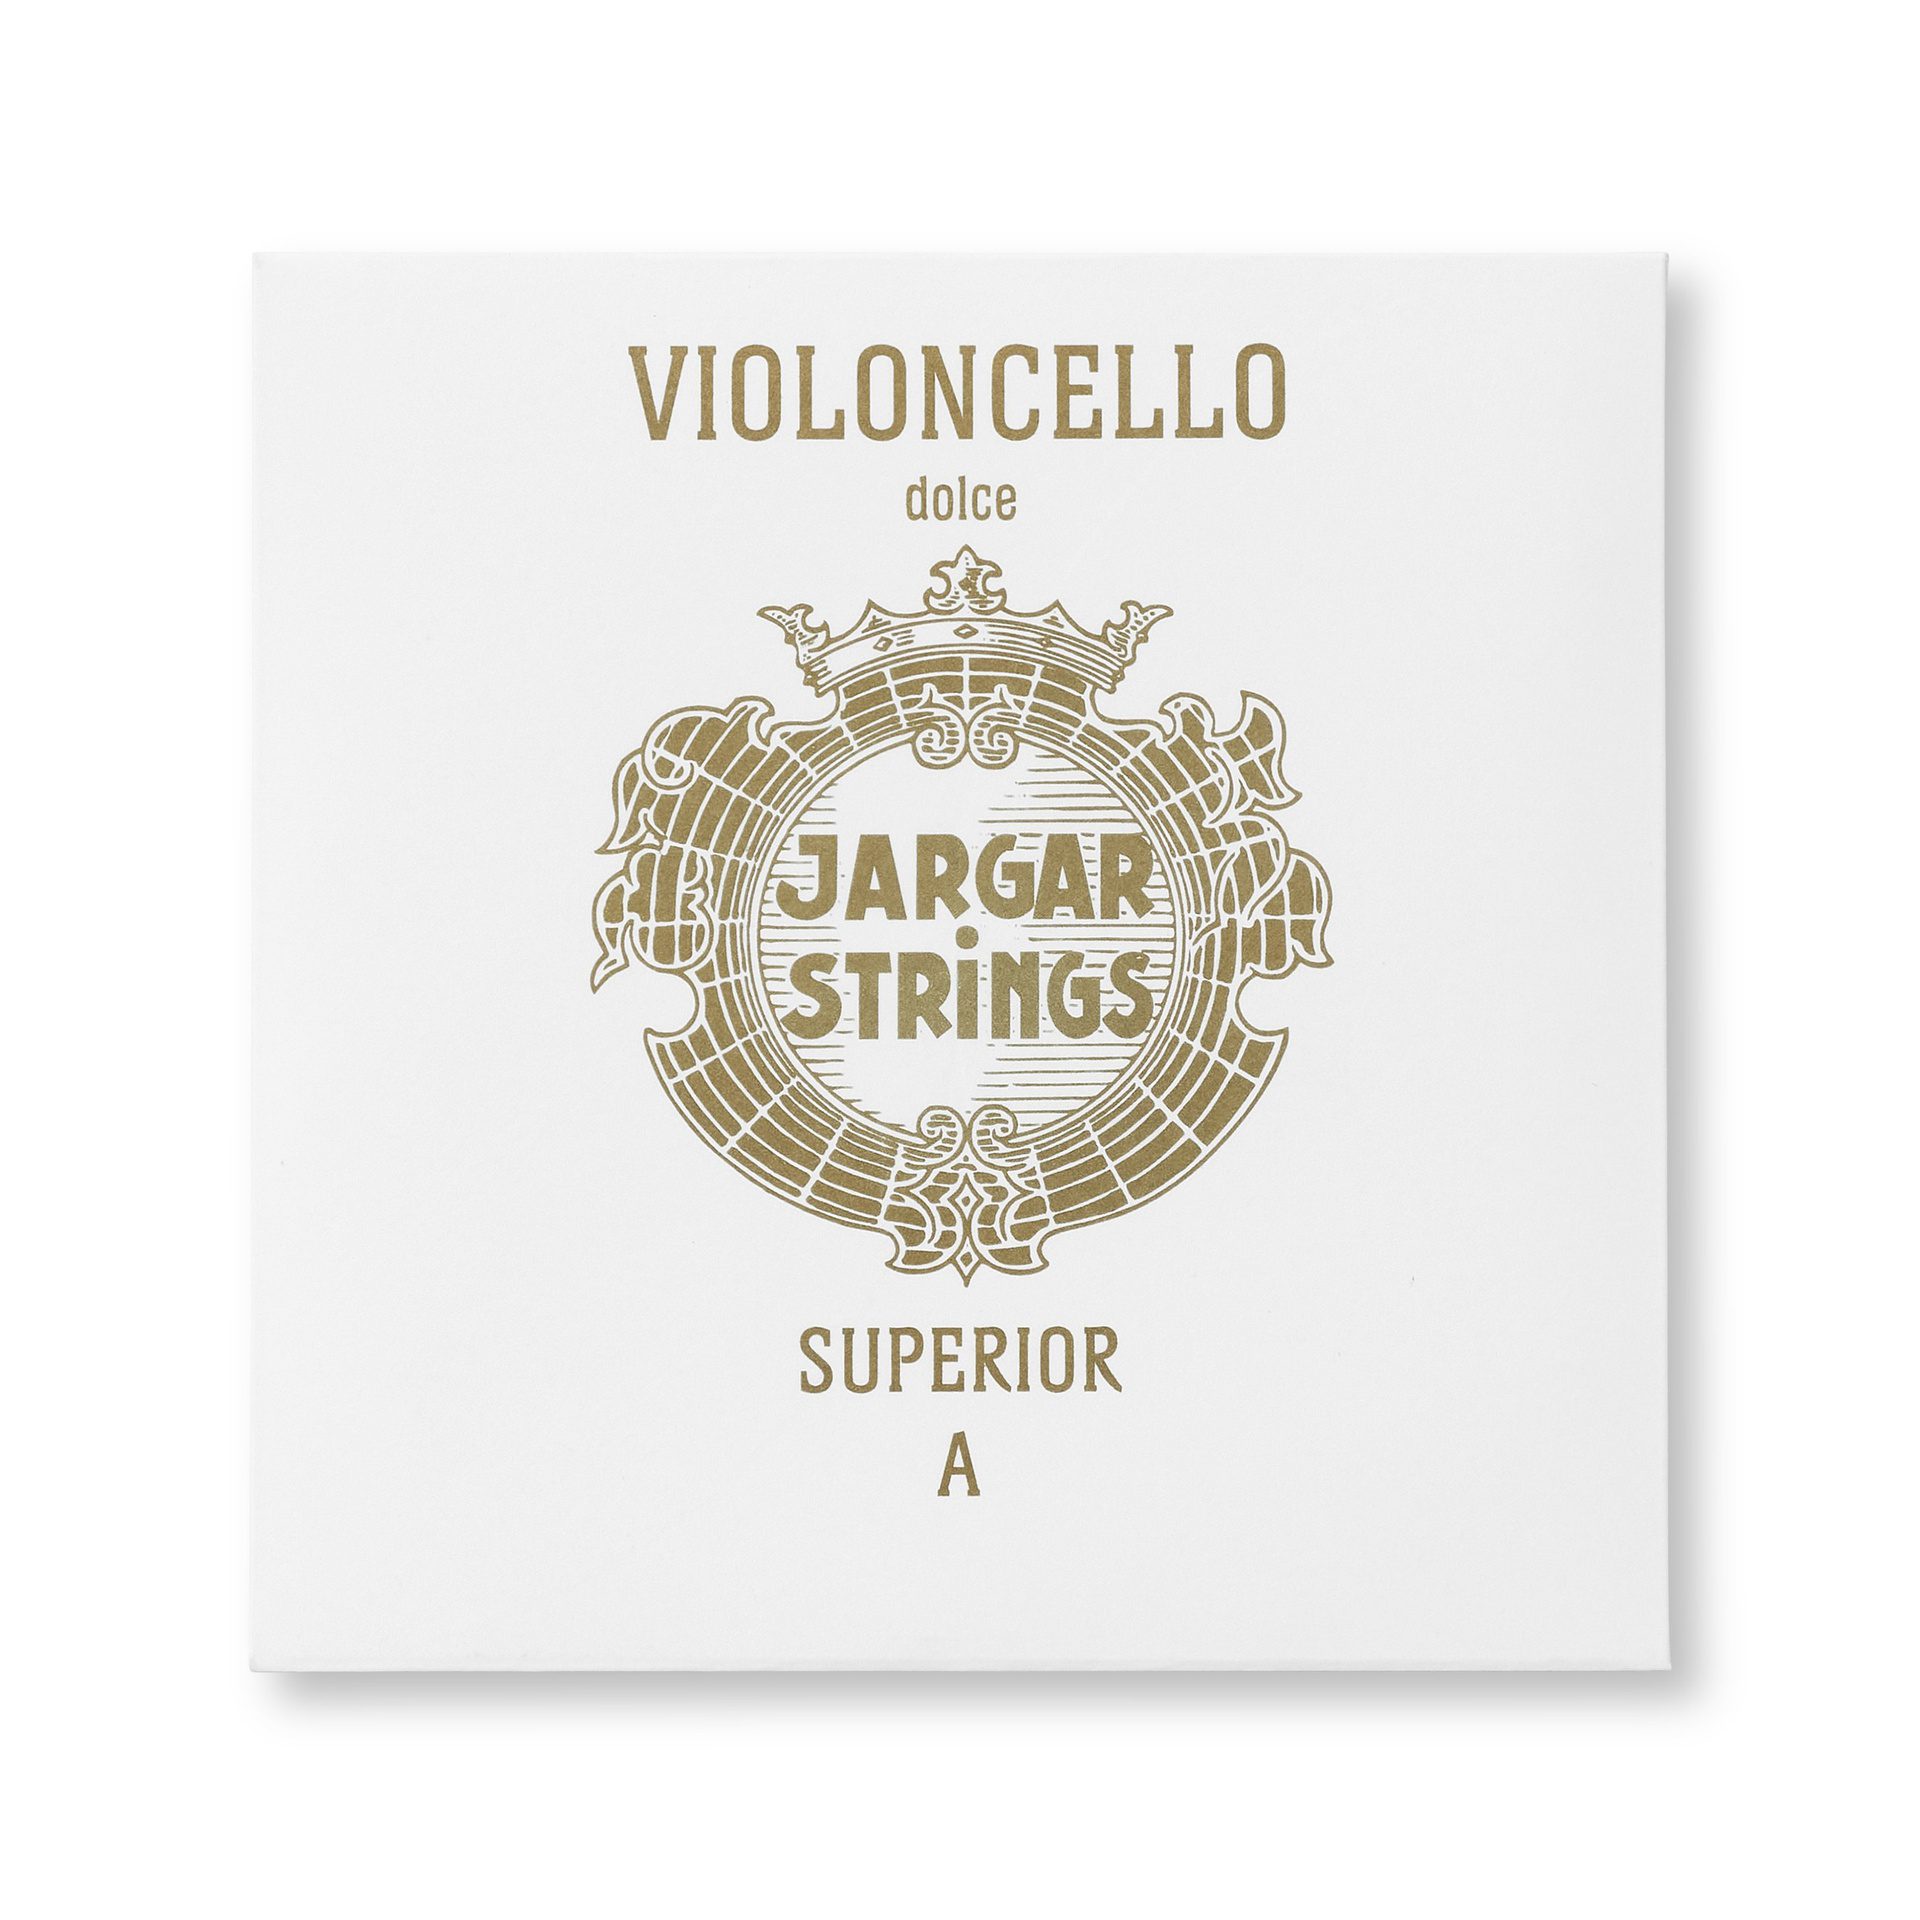 Superior Violoncello - Dolce, Single A String, 4/4